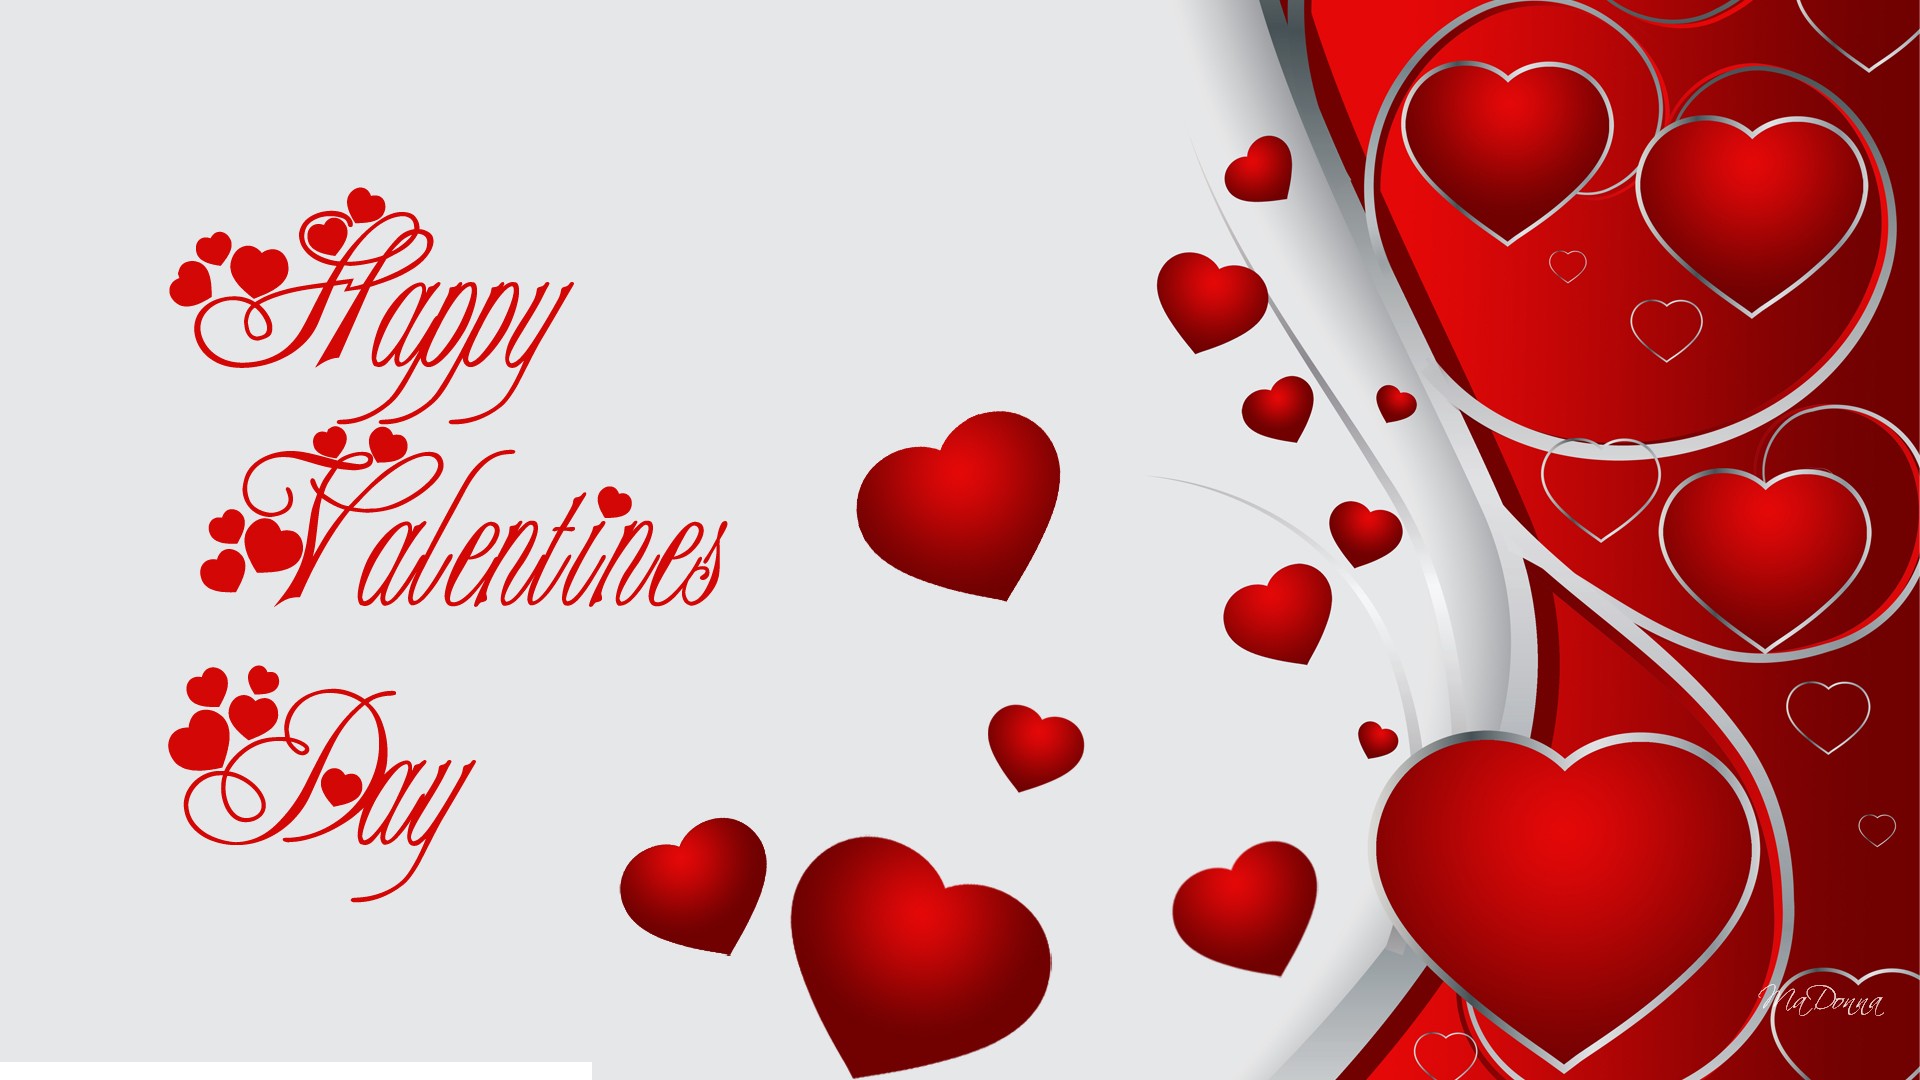 Happy Valentine S Day HD Wallpaper Background Image